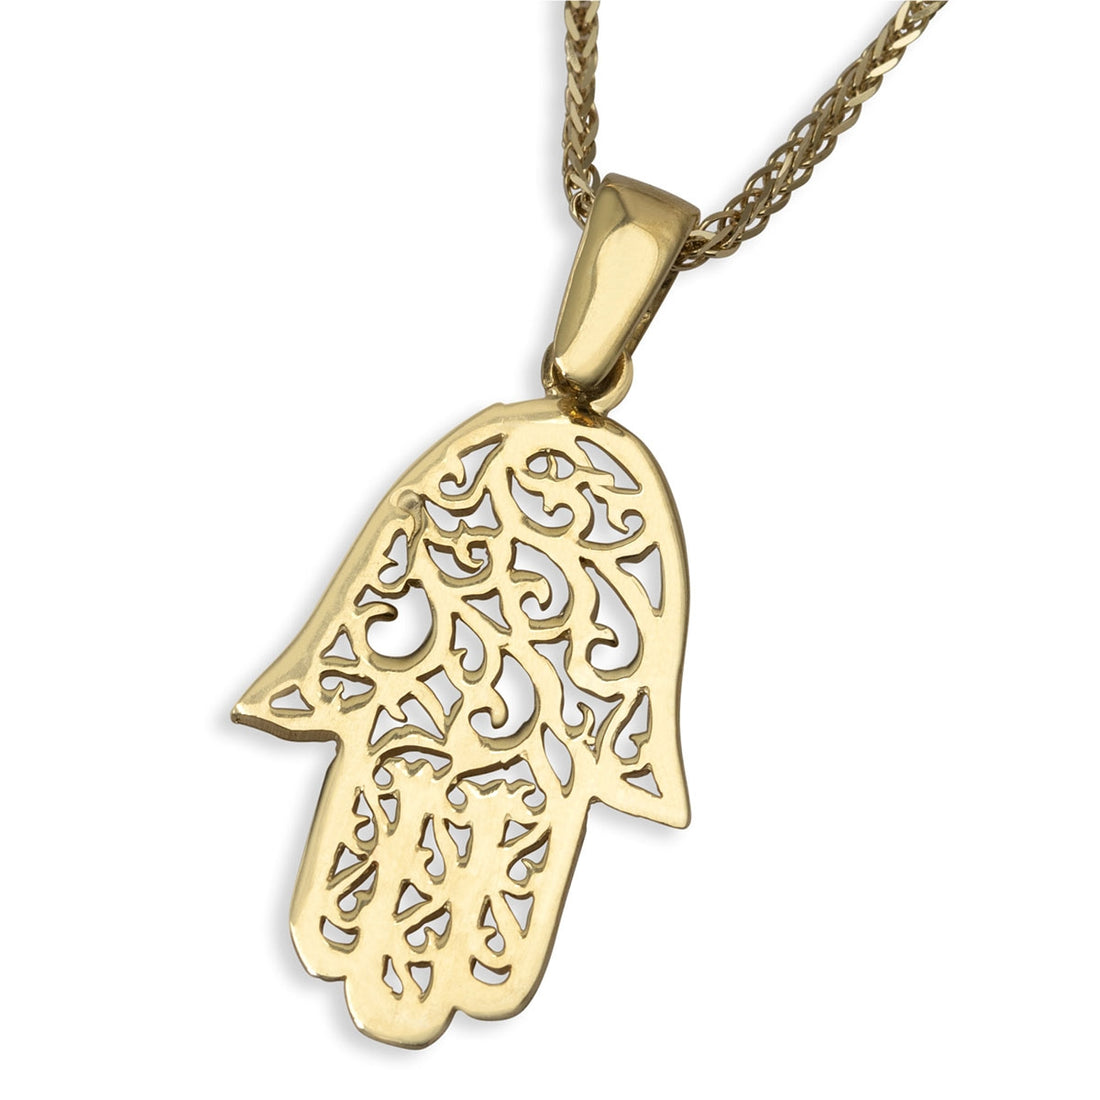 Trendy 14K Yellow Gold Hamsa Pendant Necklace With Filigree Design